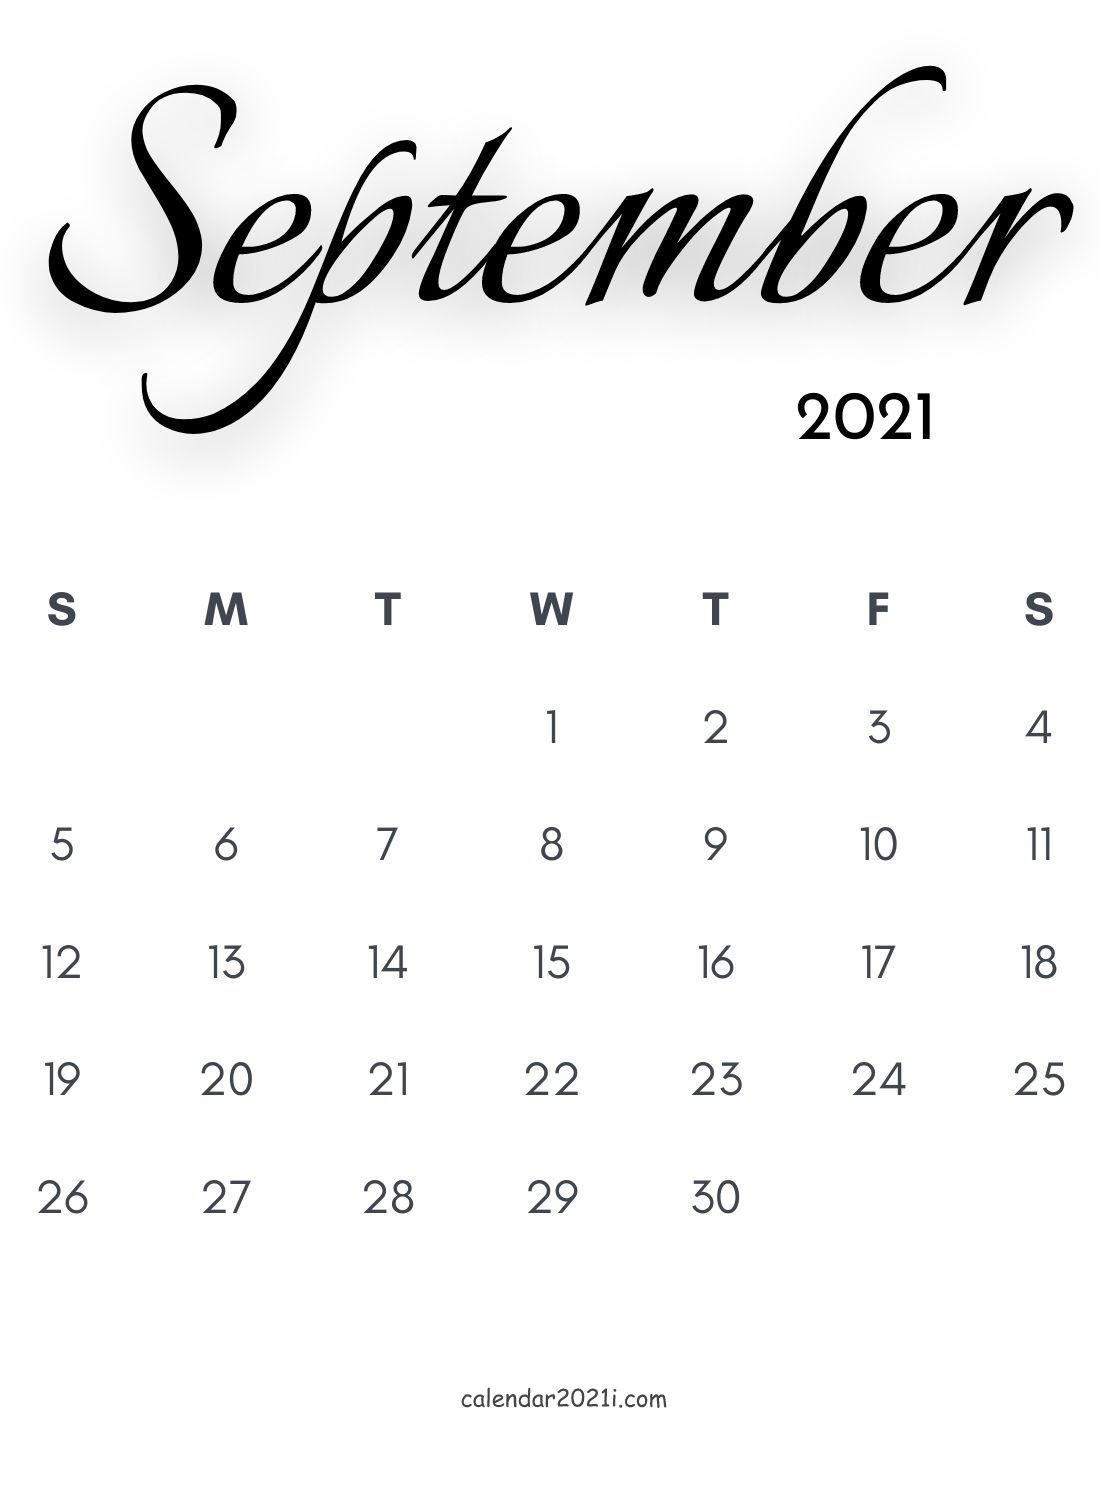 September 2021 kalender Daftar Hari